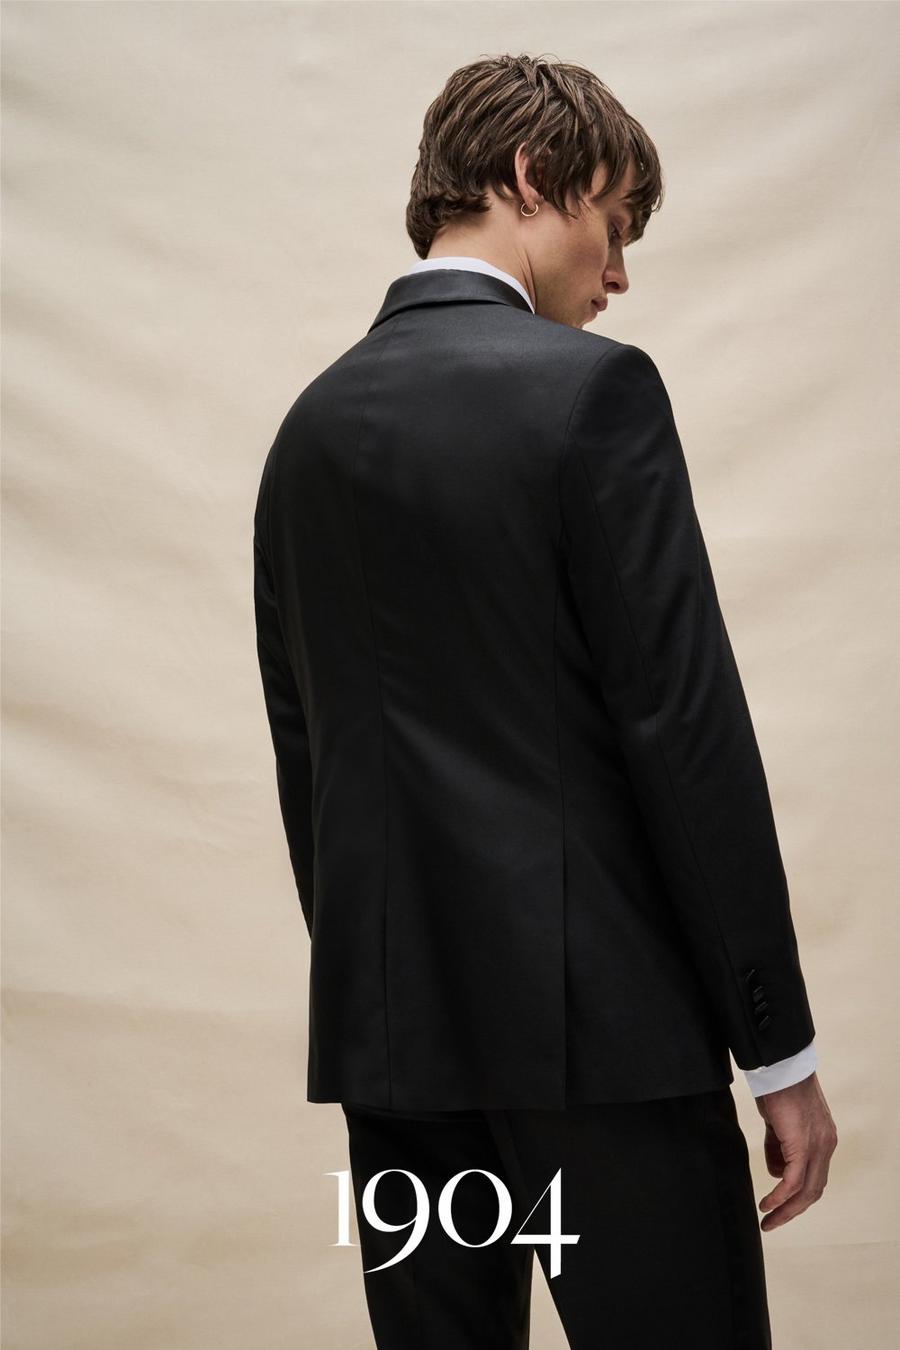 194 Tailored Fit Black Premium Tux Suit Trouser